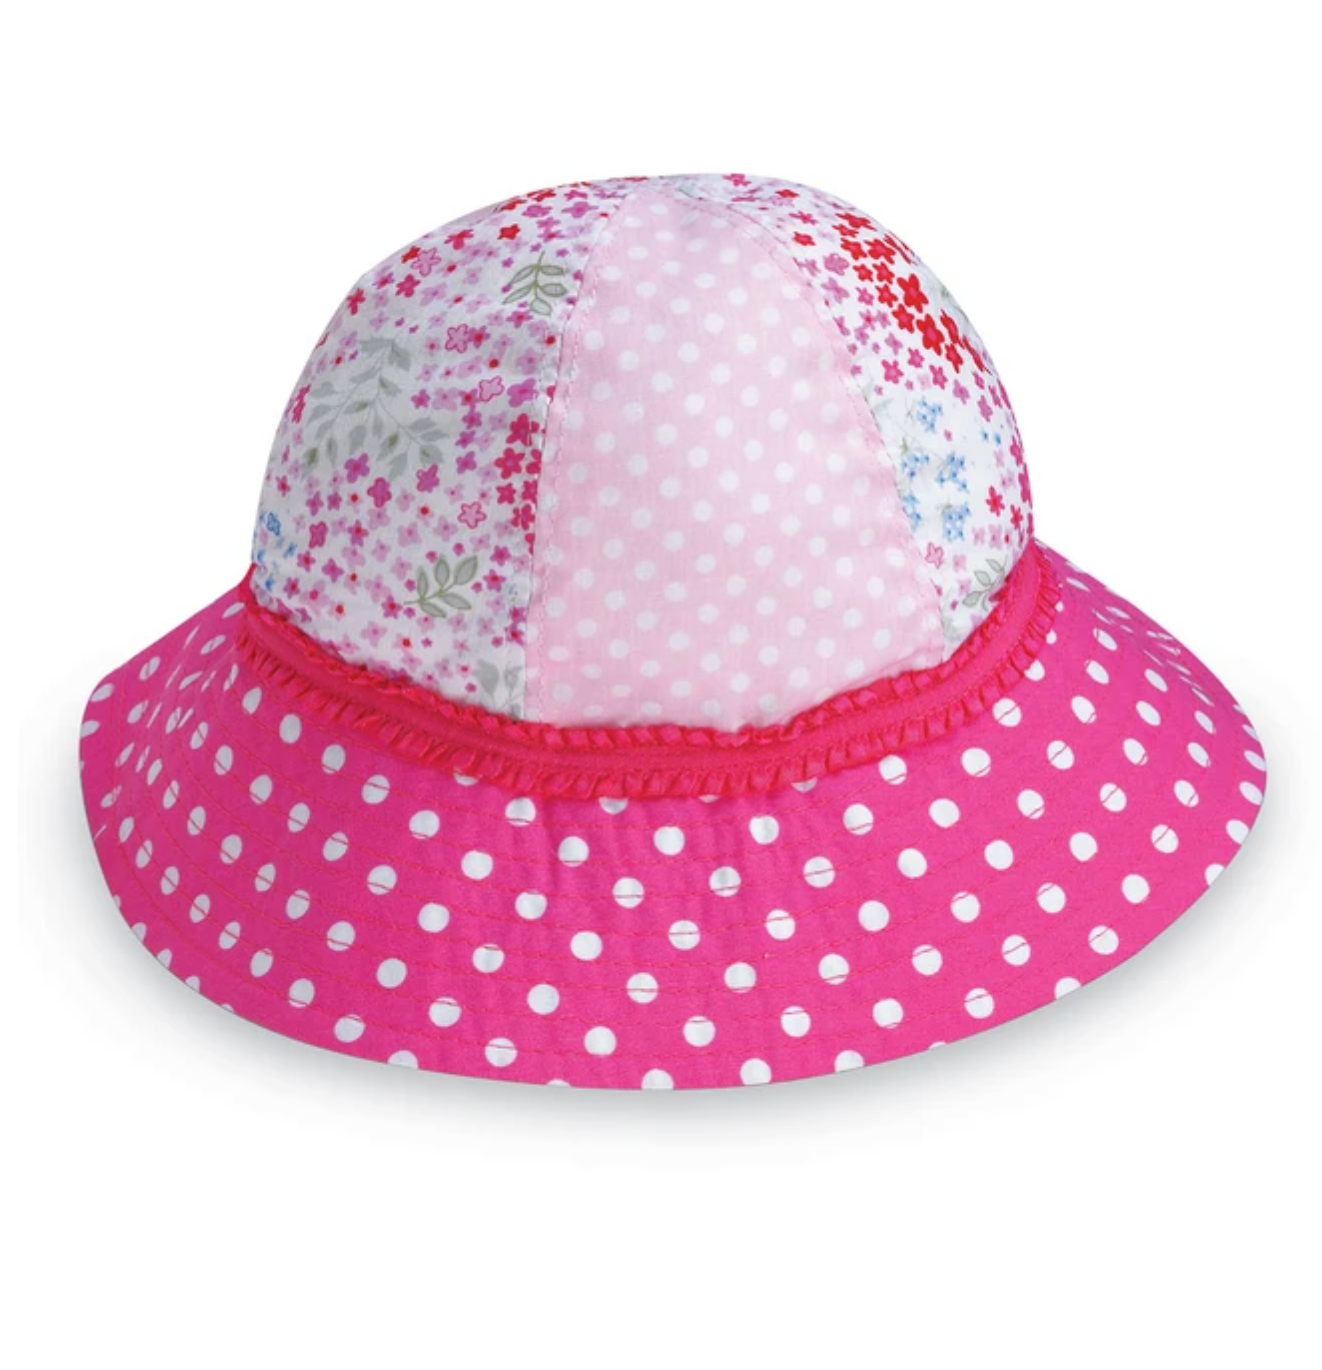 Girls Infant Pink Polka Dot Bucket Hat